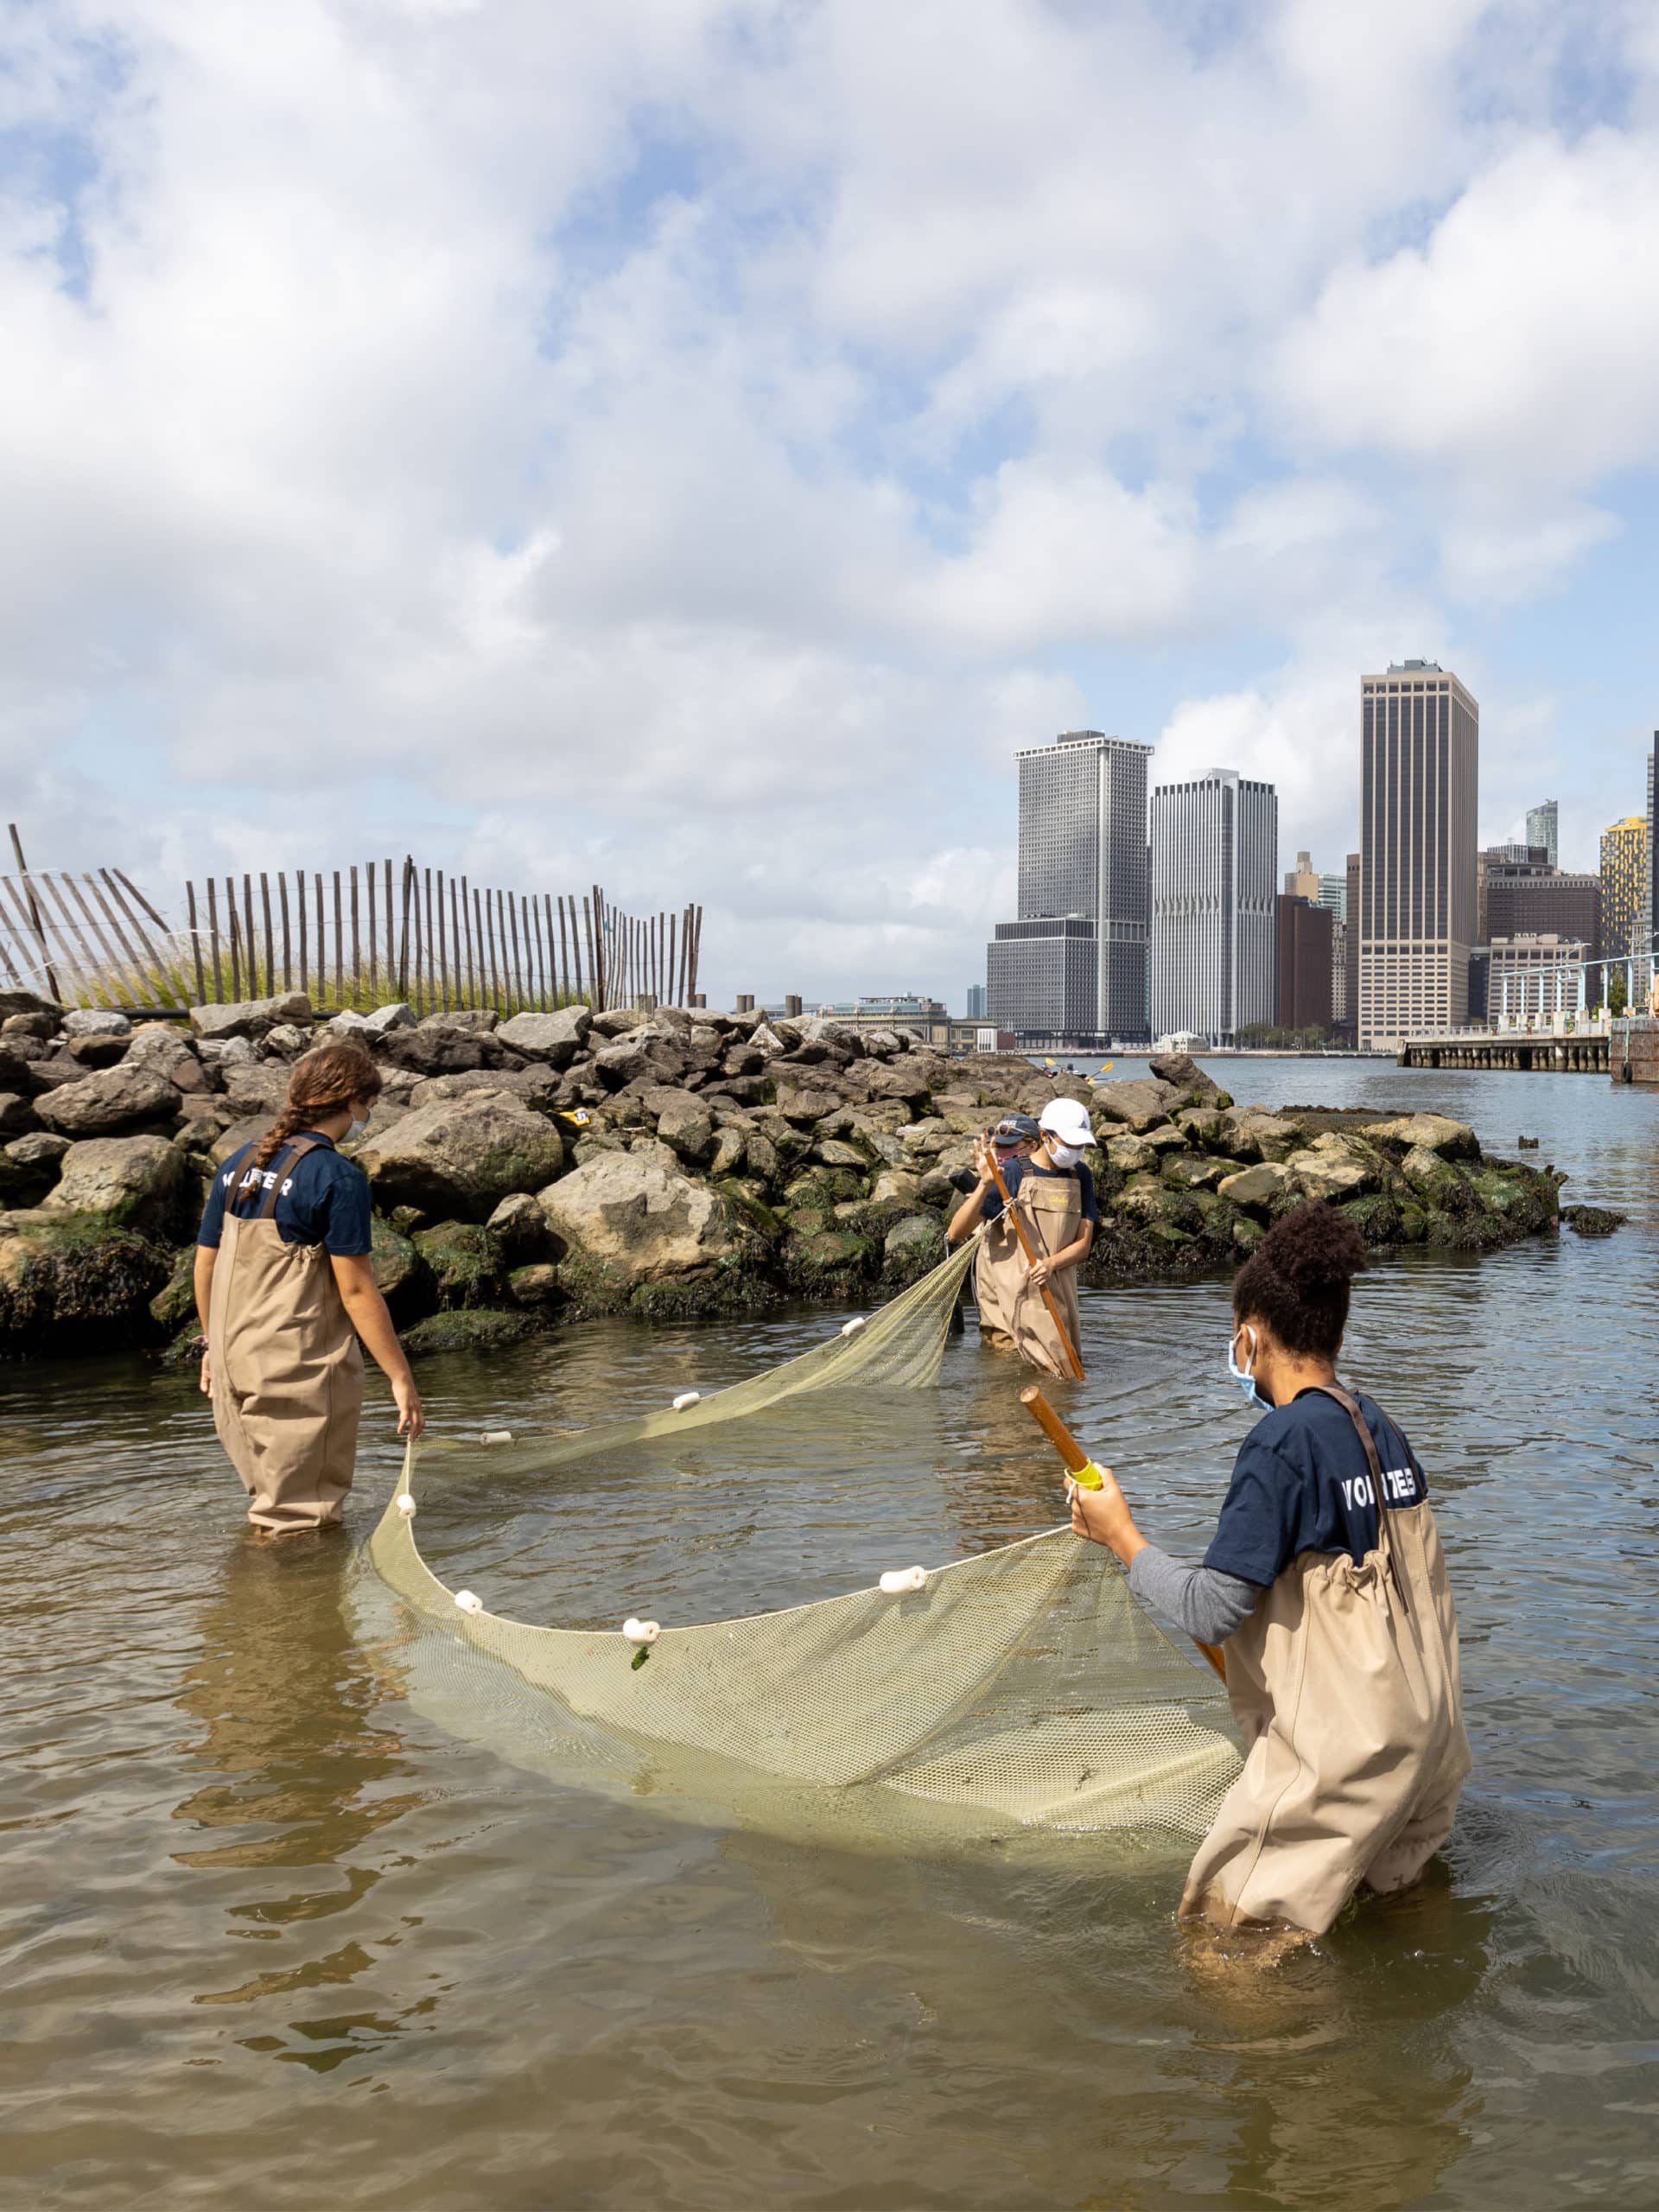 Teens dragging a seine net through the shallow water.